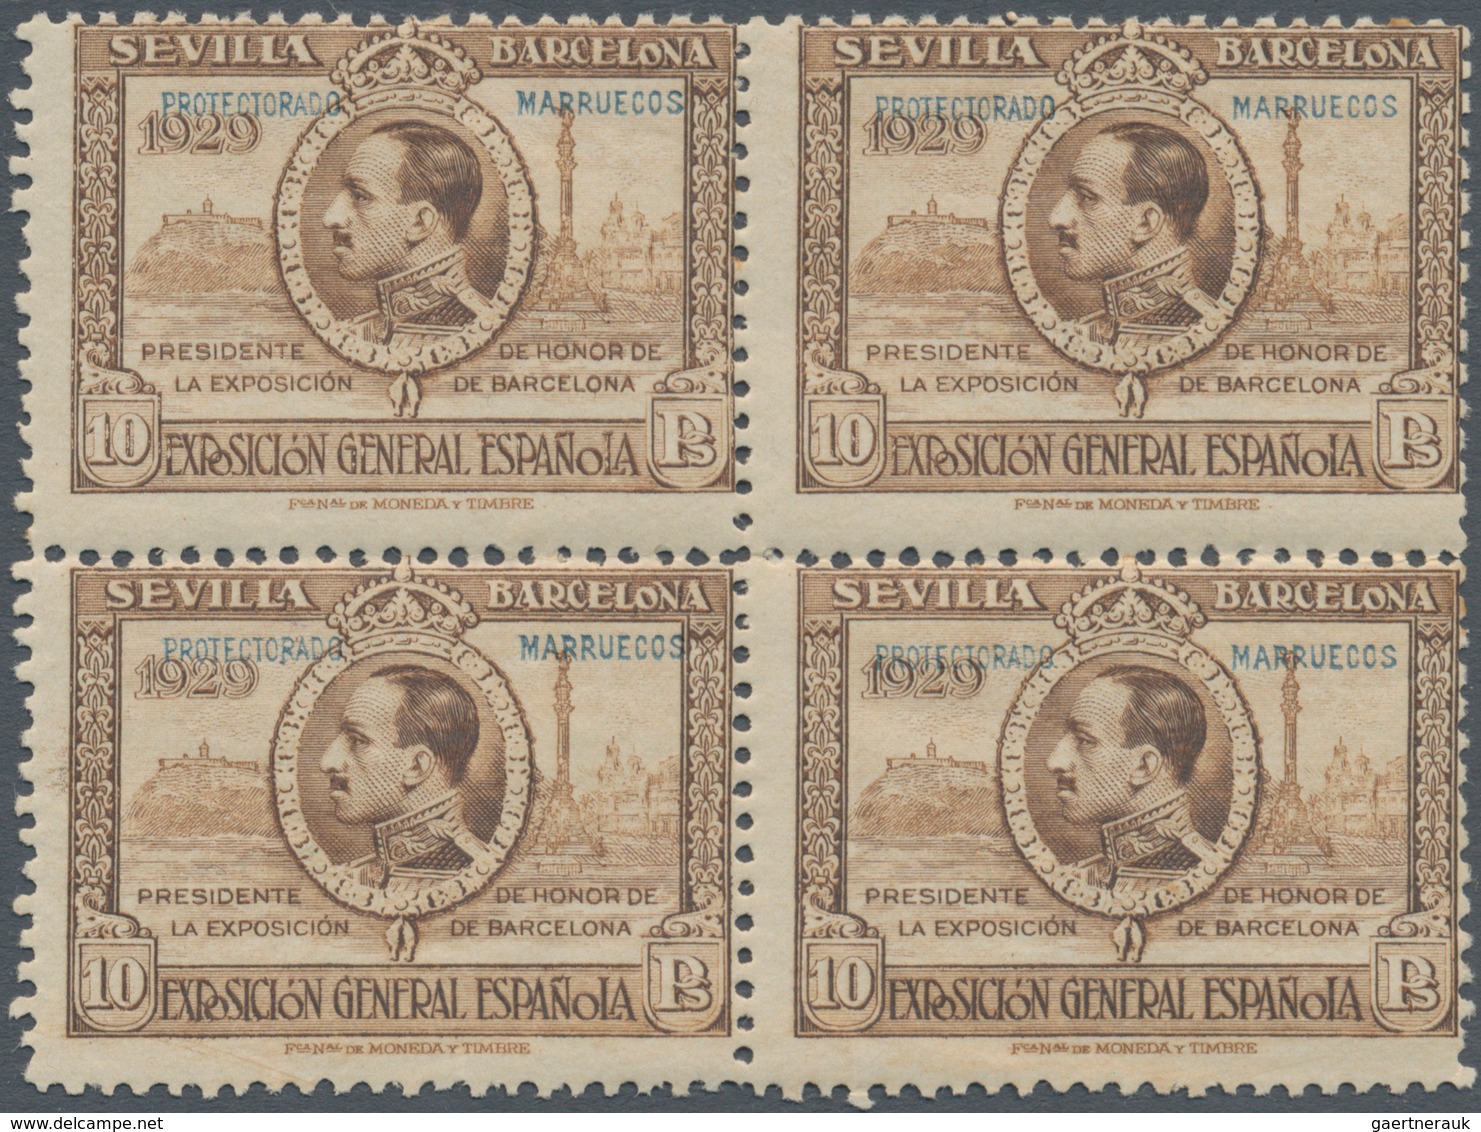 Spanische Kolonien: 1902/1950 (ca.), duplicates from CABO JUBY, GOLFO de GUINEA, GUINEA, IFNI, MOROC